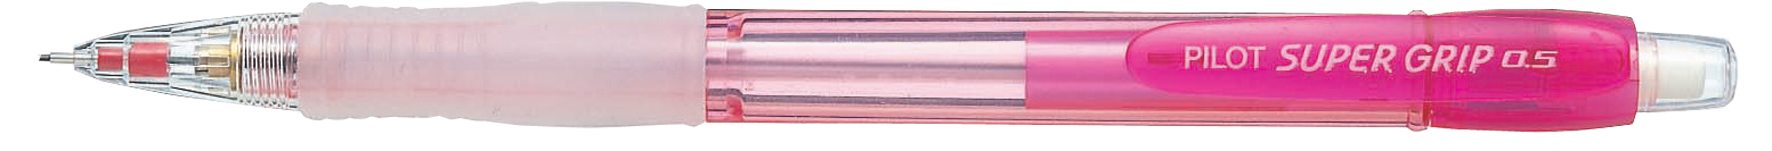 [2216677] Stiftpenna Super Grip 0,5 rosa